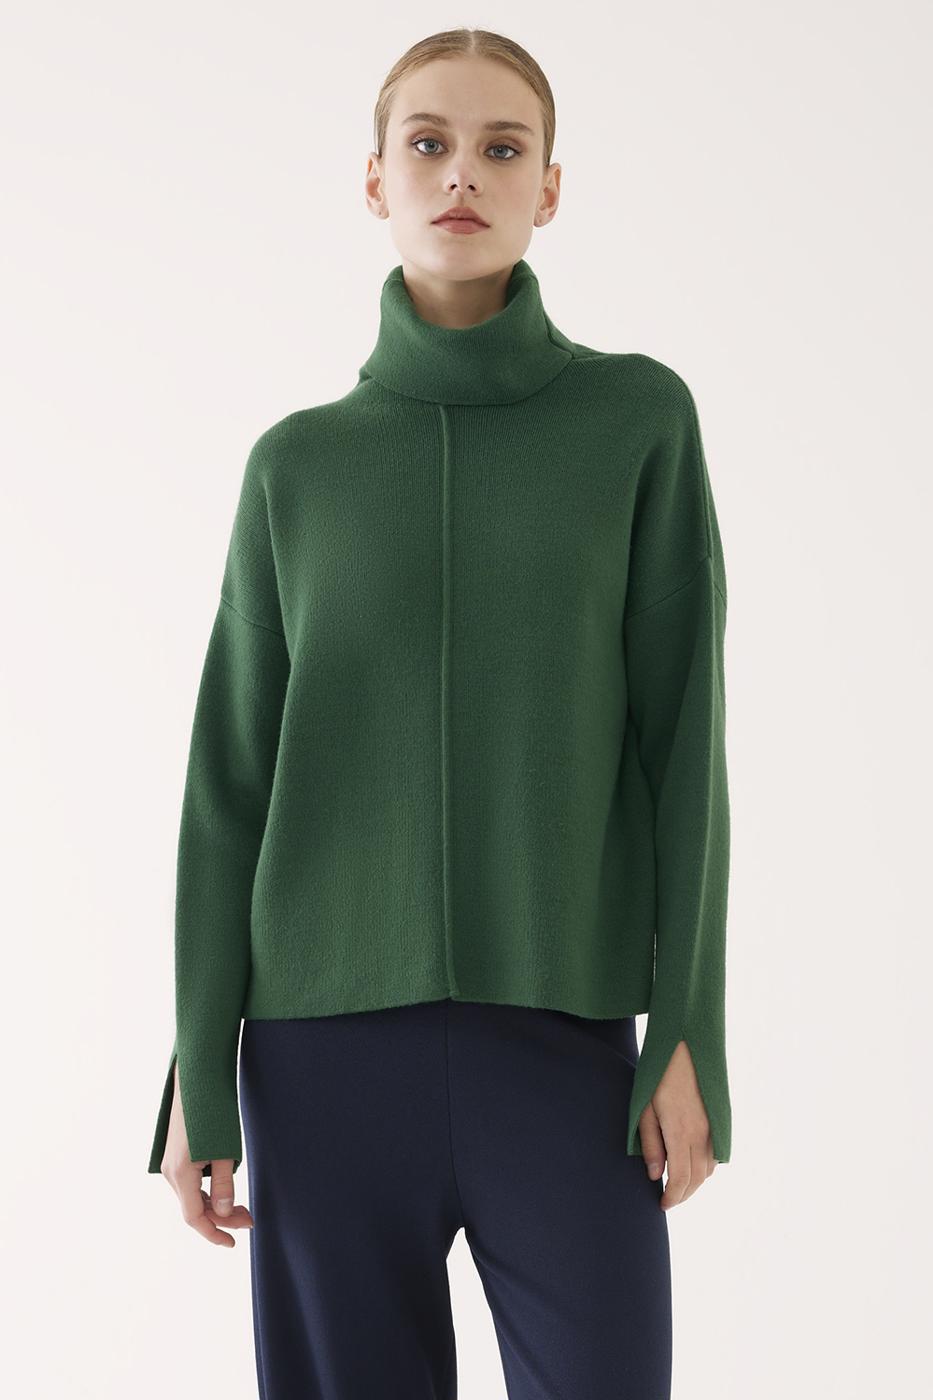 Bayan ZÜMRÜT YEŞİLİ Mayra Regular Fit Standart Boy Zümrüt Yeşili Renk Kadın Triko Bluz